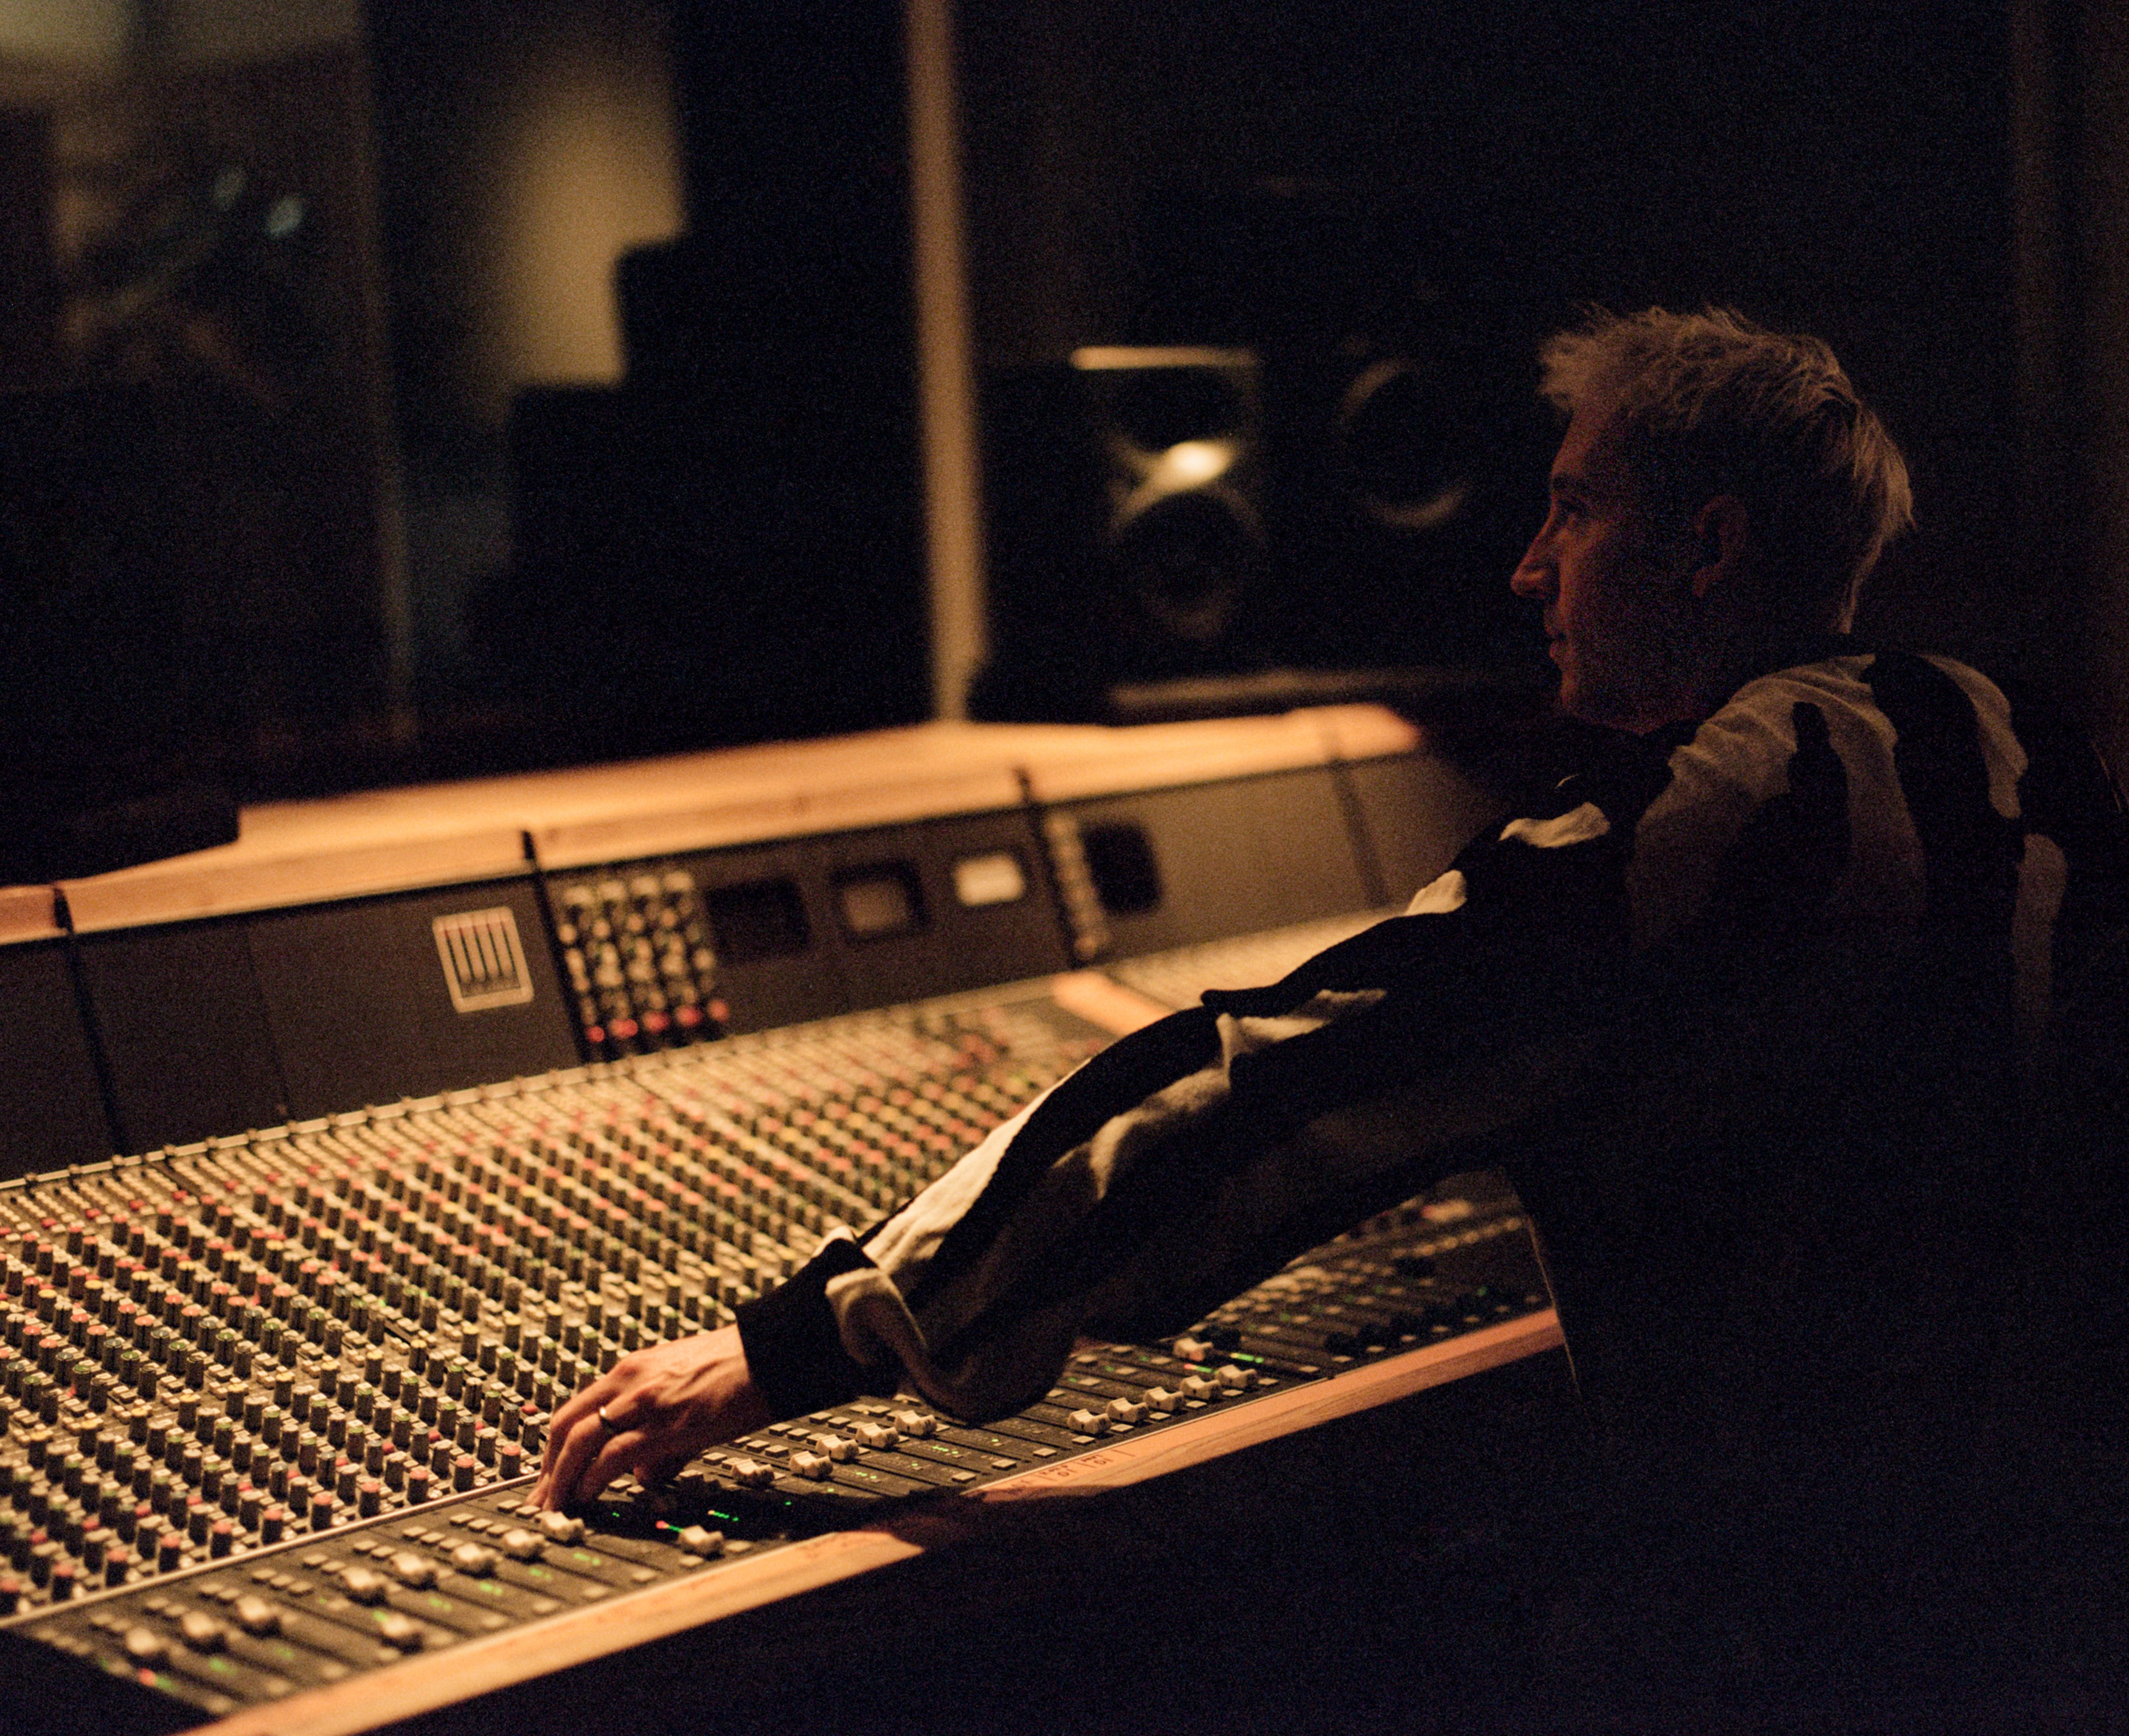 Mikko Gordon in studio photographed by Christian Cargill